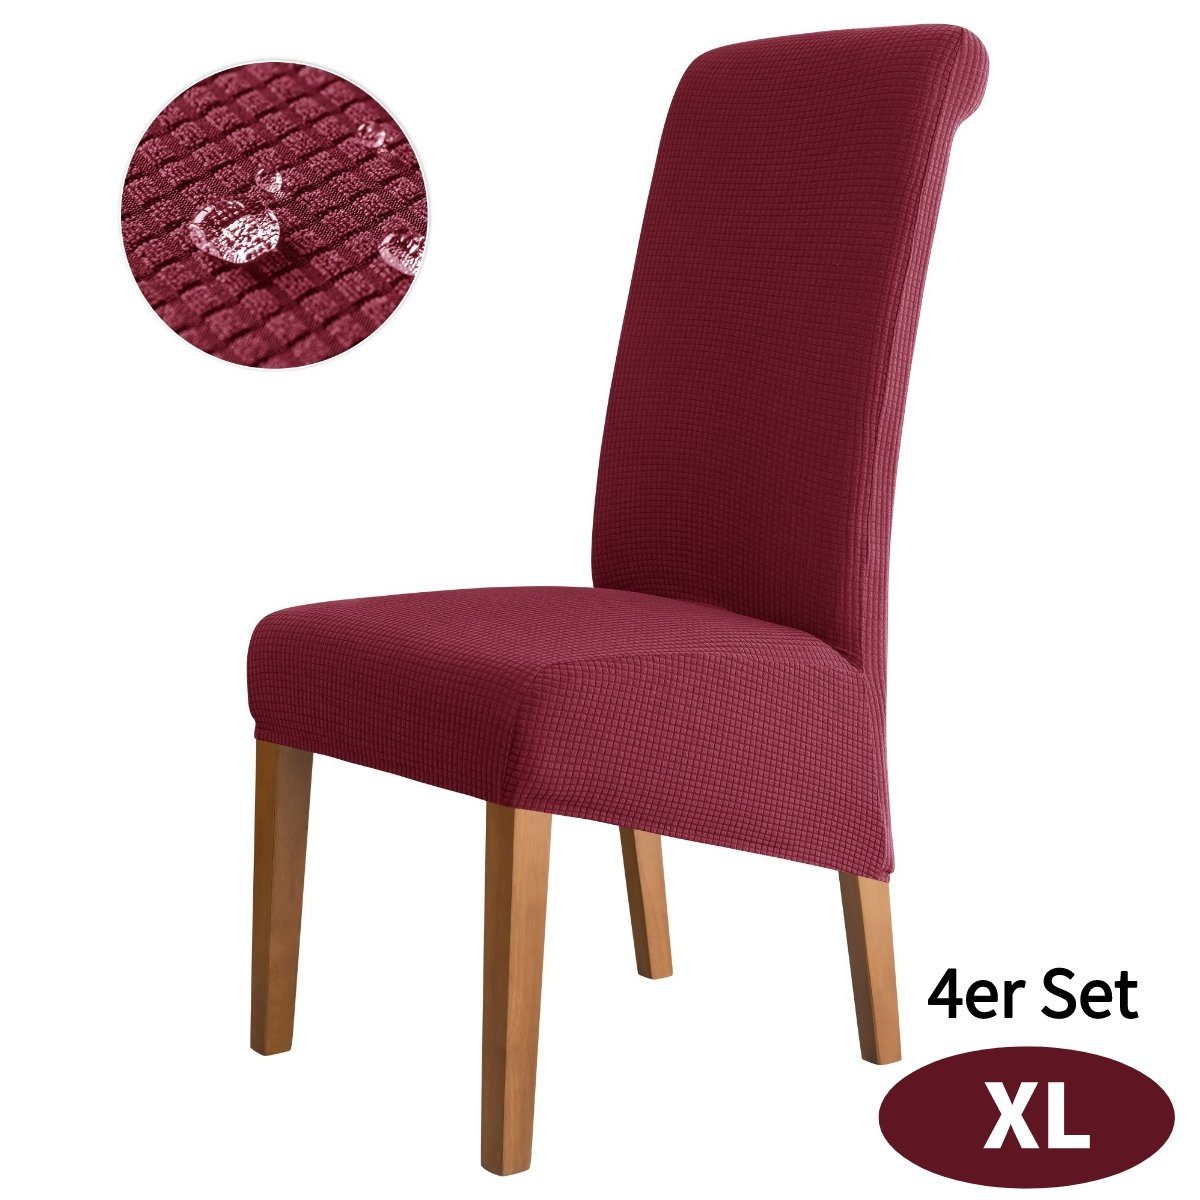 Sitzflächenhusse Universal Stuhlbezug Stretch abnehmbar, Rot|XL 7Magic, Stretchstoff, hussen Stuhl Hochwertiger Stretch-Stuhlhussen, waschbar,4er-set